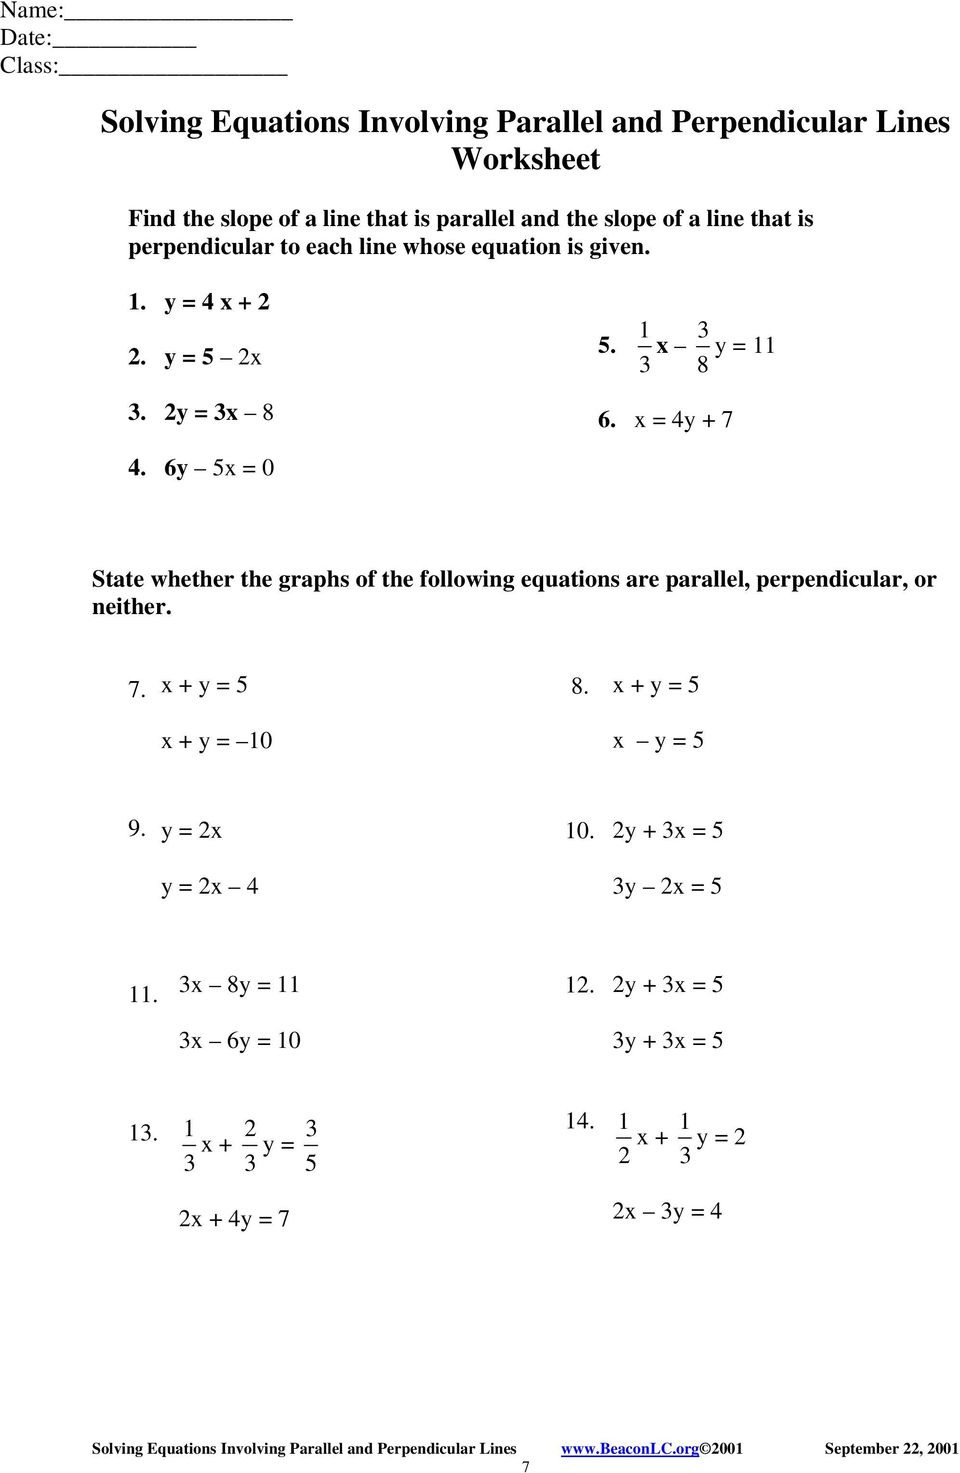 algebra 1 5.6 homework parallel and perpendicular worksheet answers